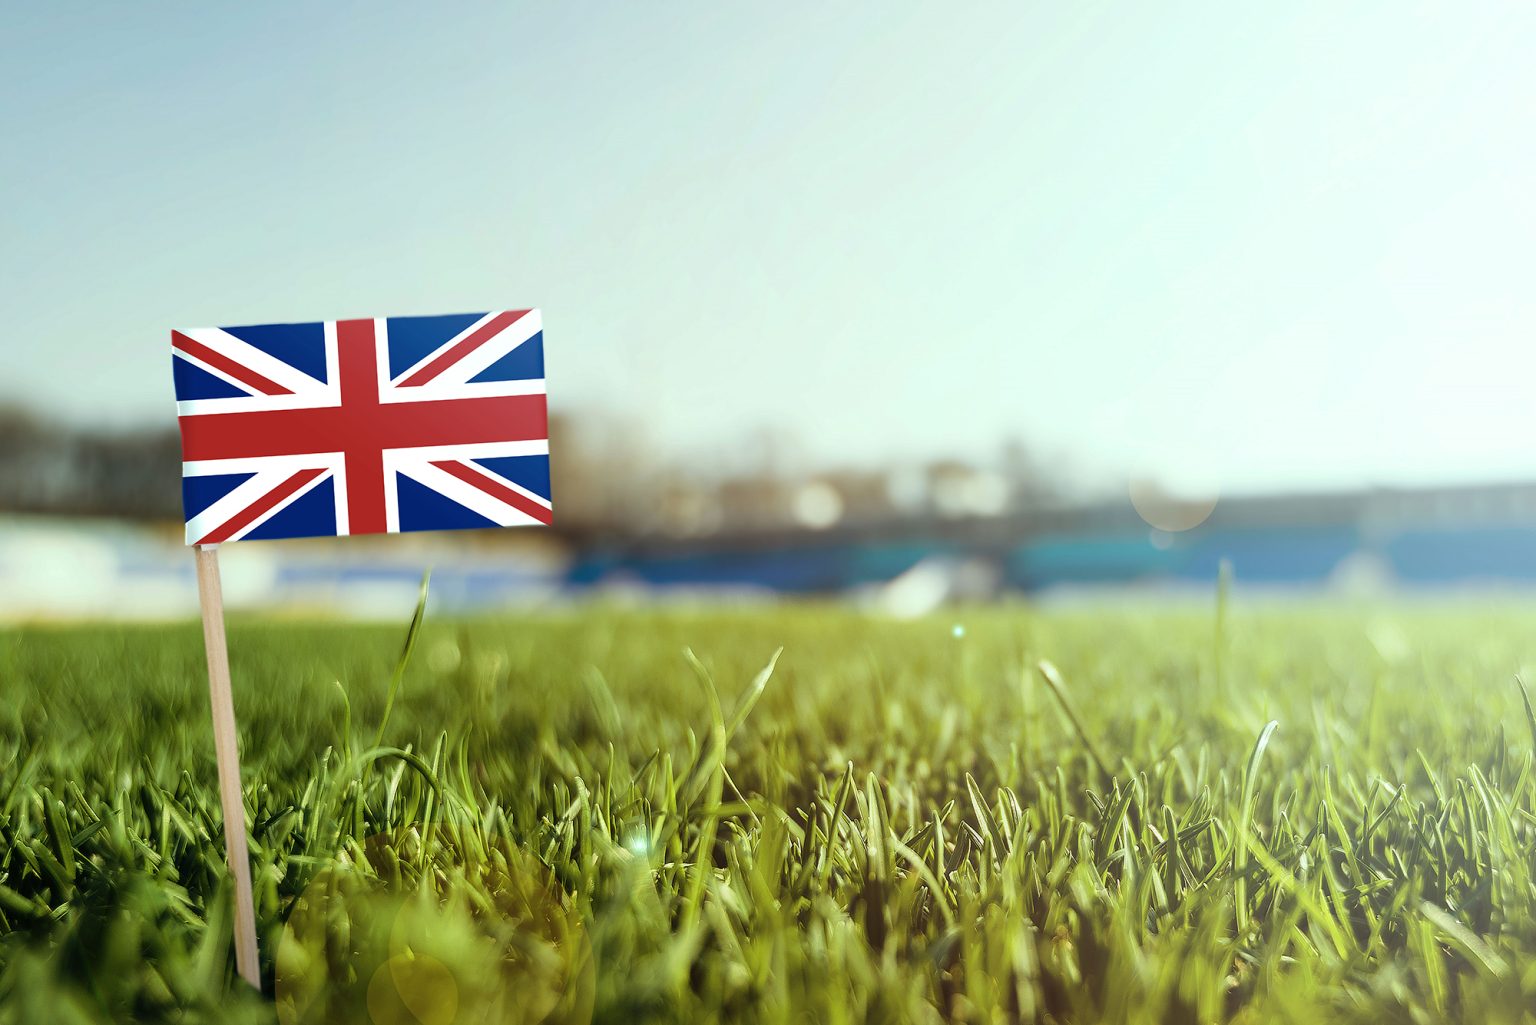 Miniature stick United Kingdom flag on green grass, close up sunny field